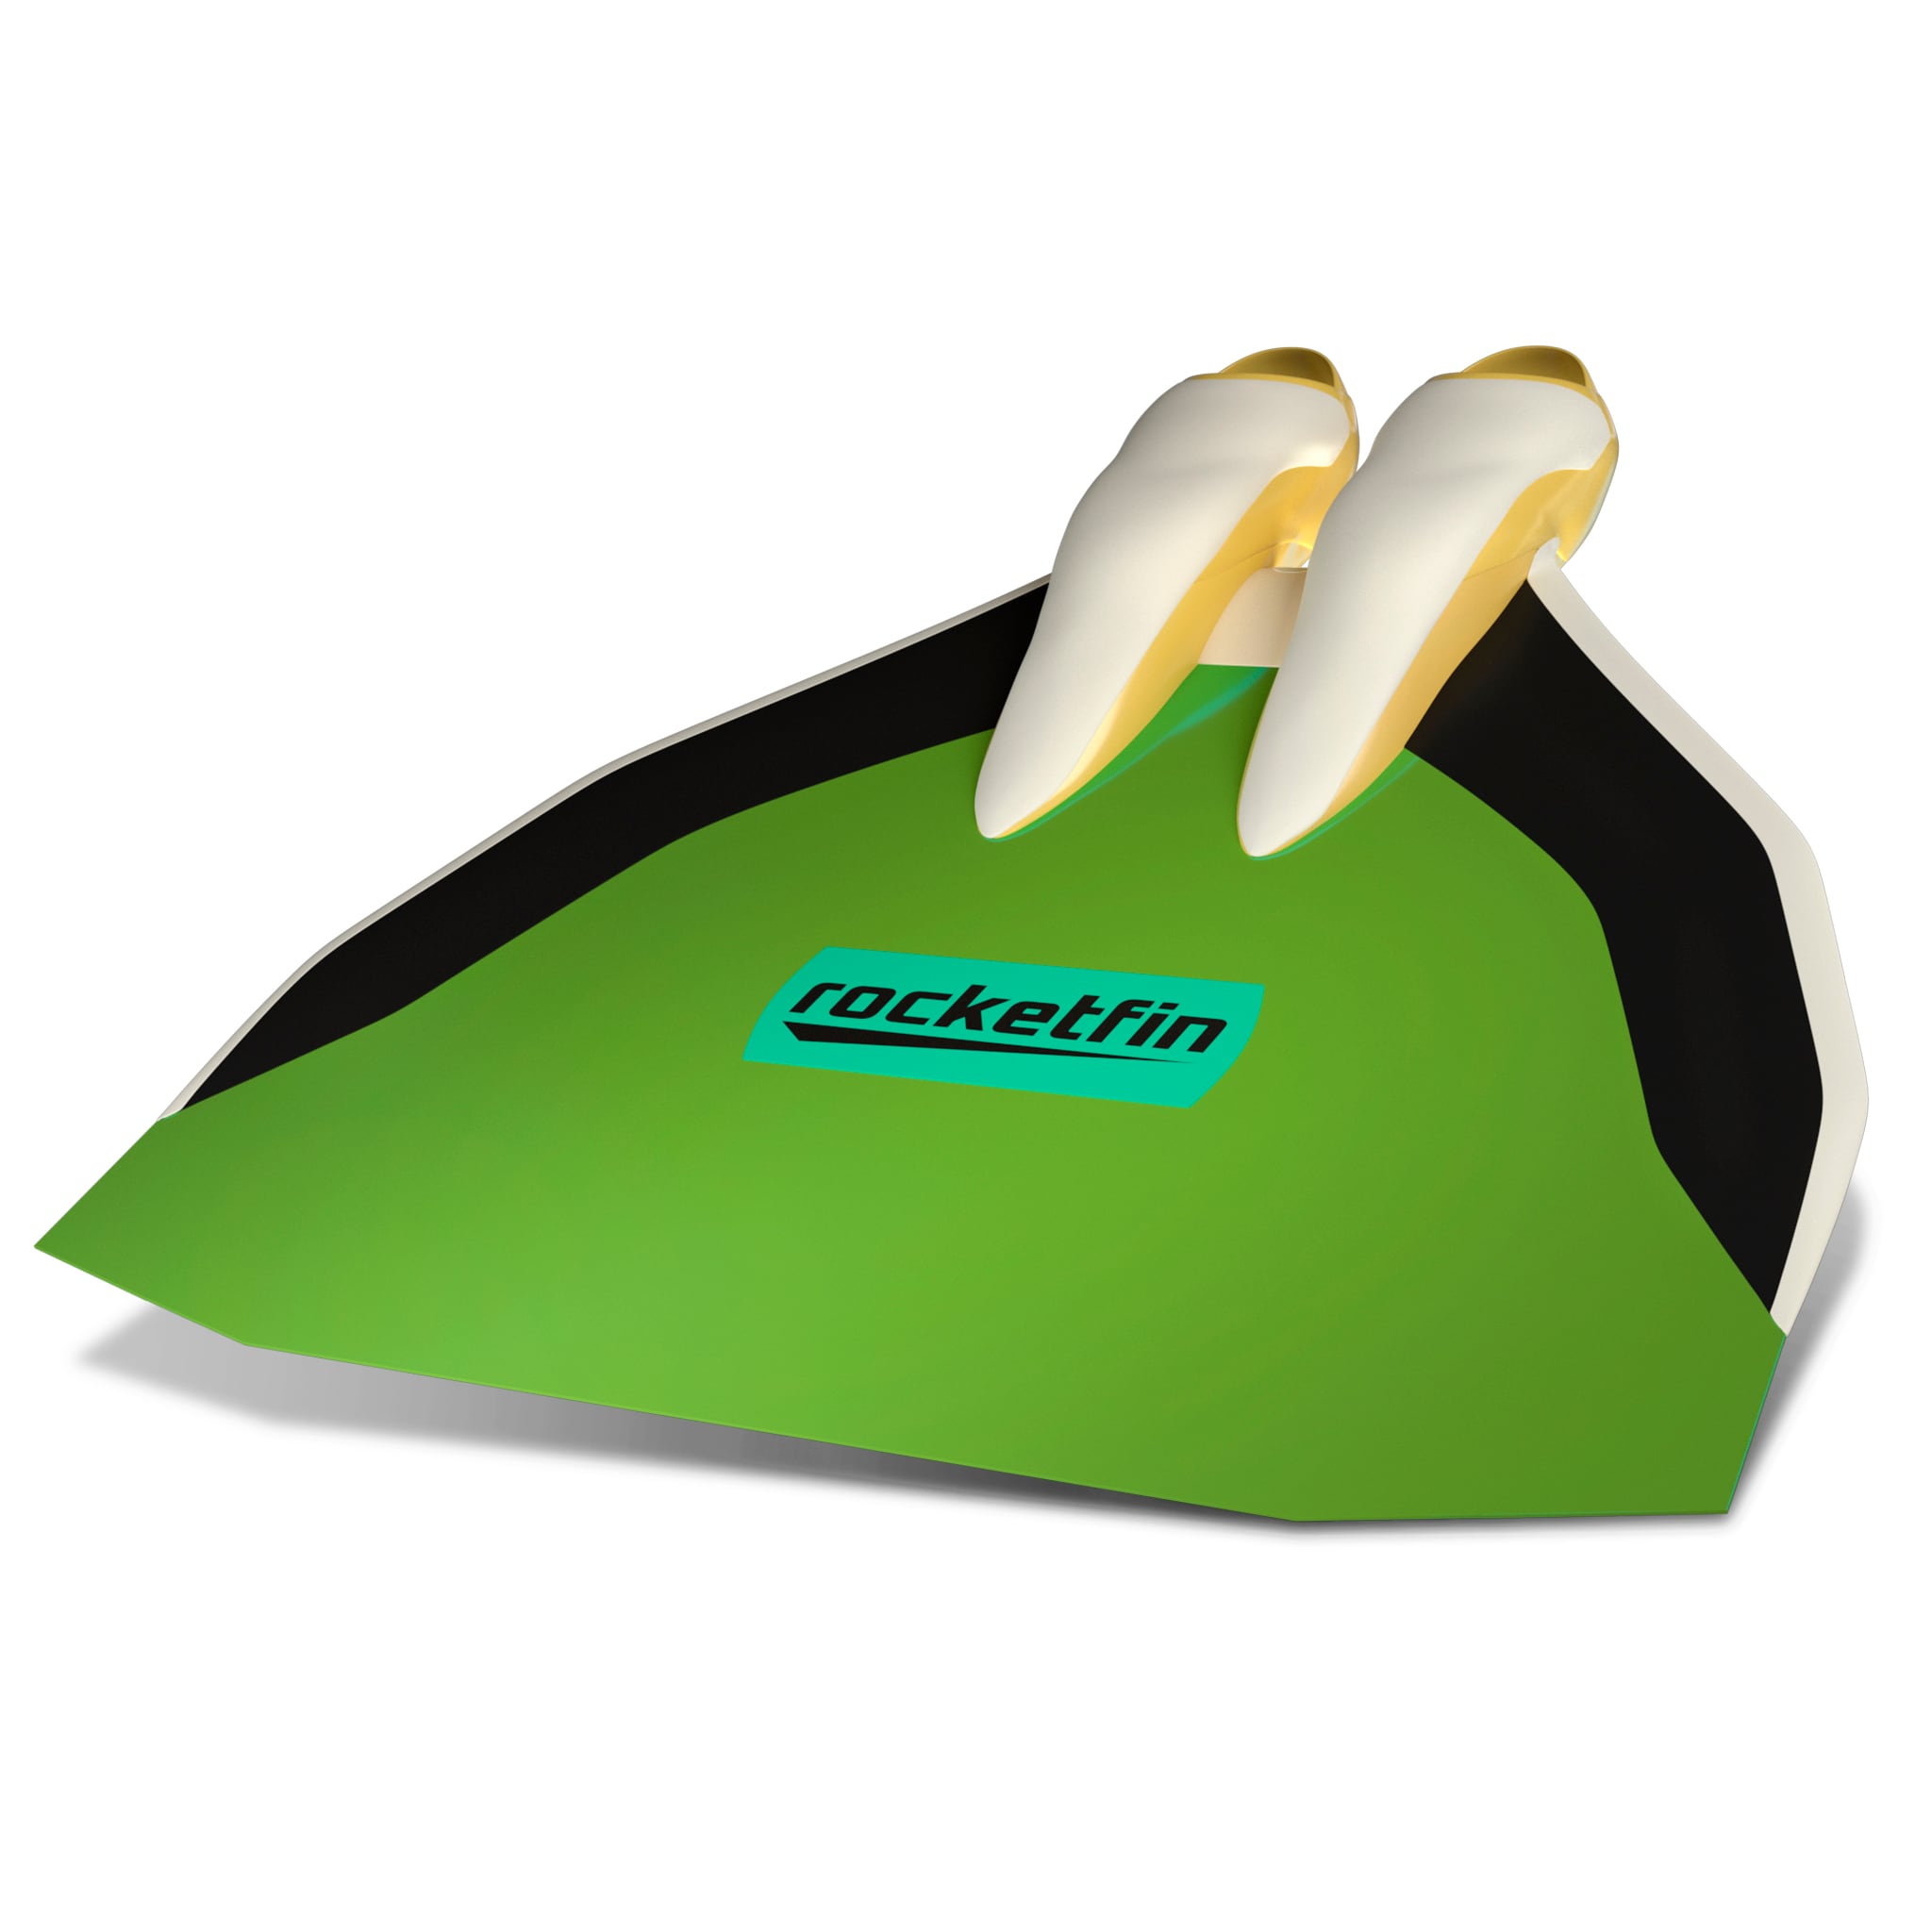 Rocketfin】NEW 2015 ロケットフィン 競技用モノフィン | フィン 